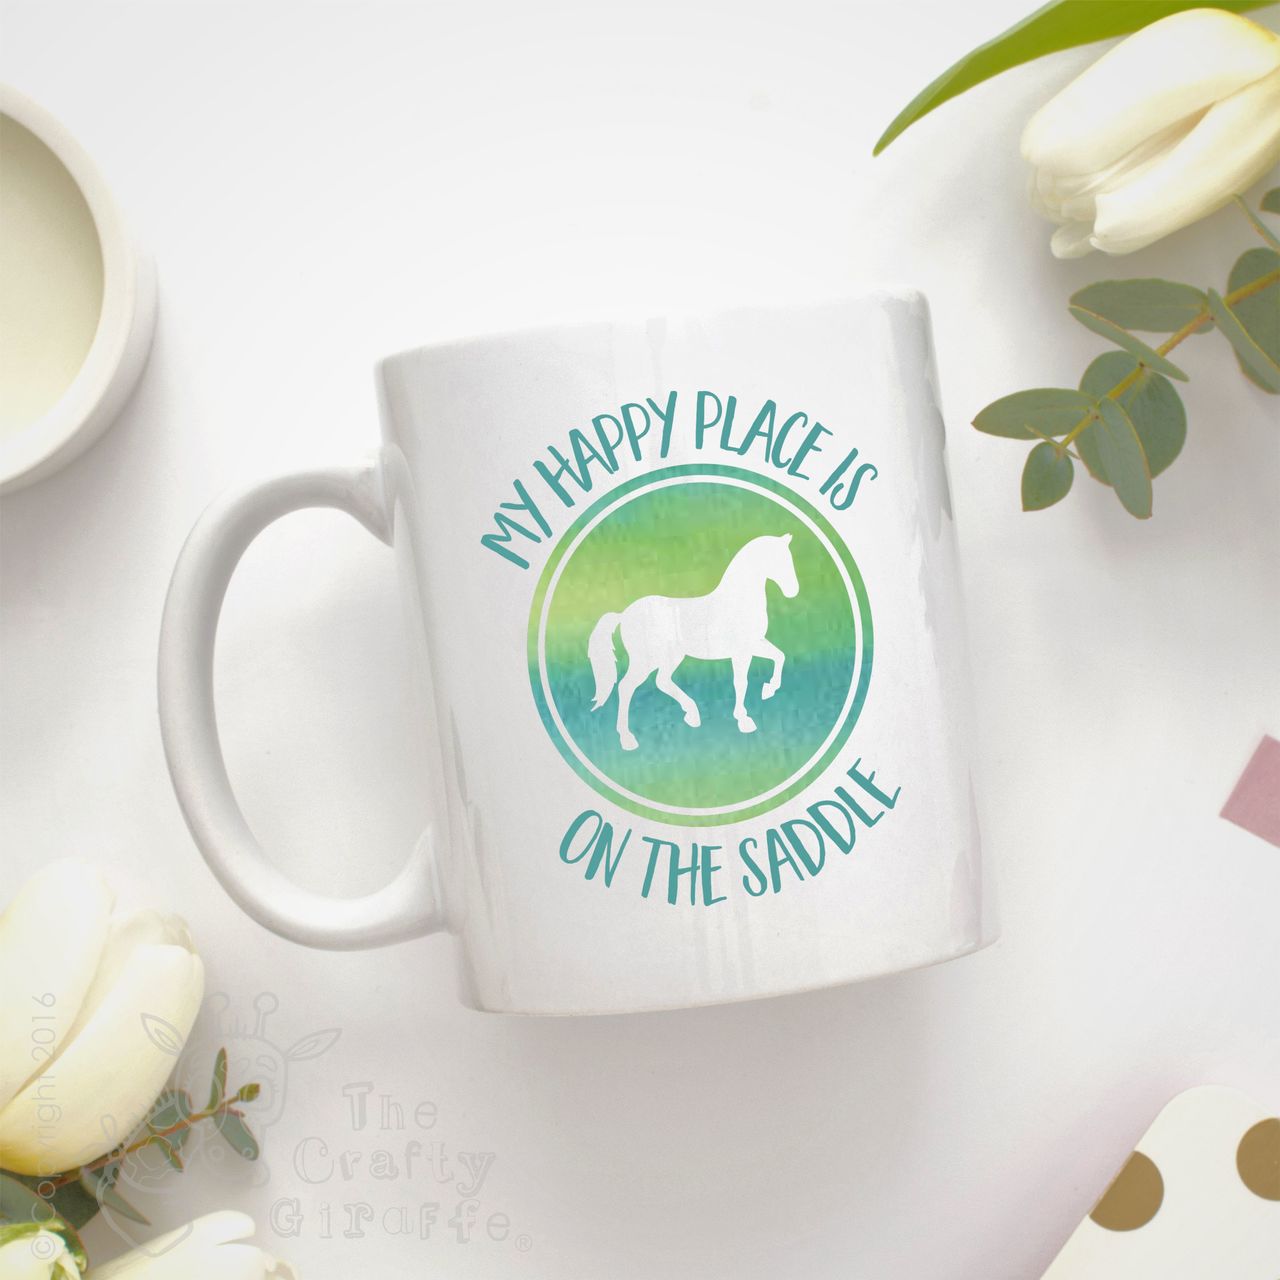 Personalised Mug – My happy place is on the saddle